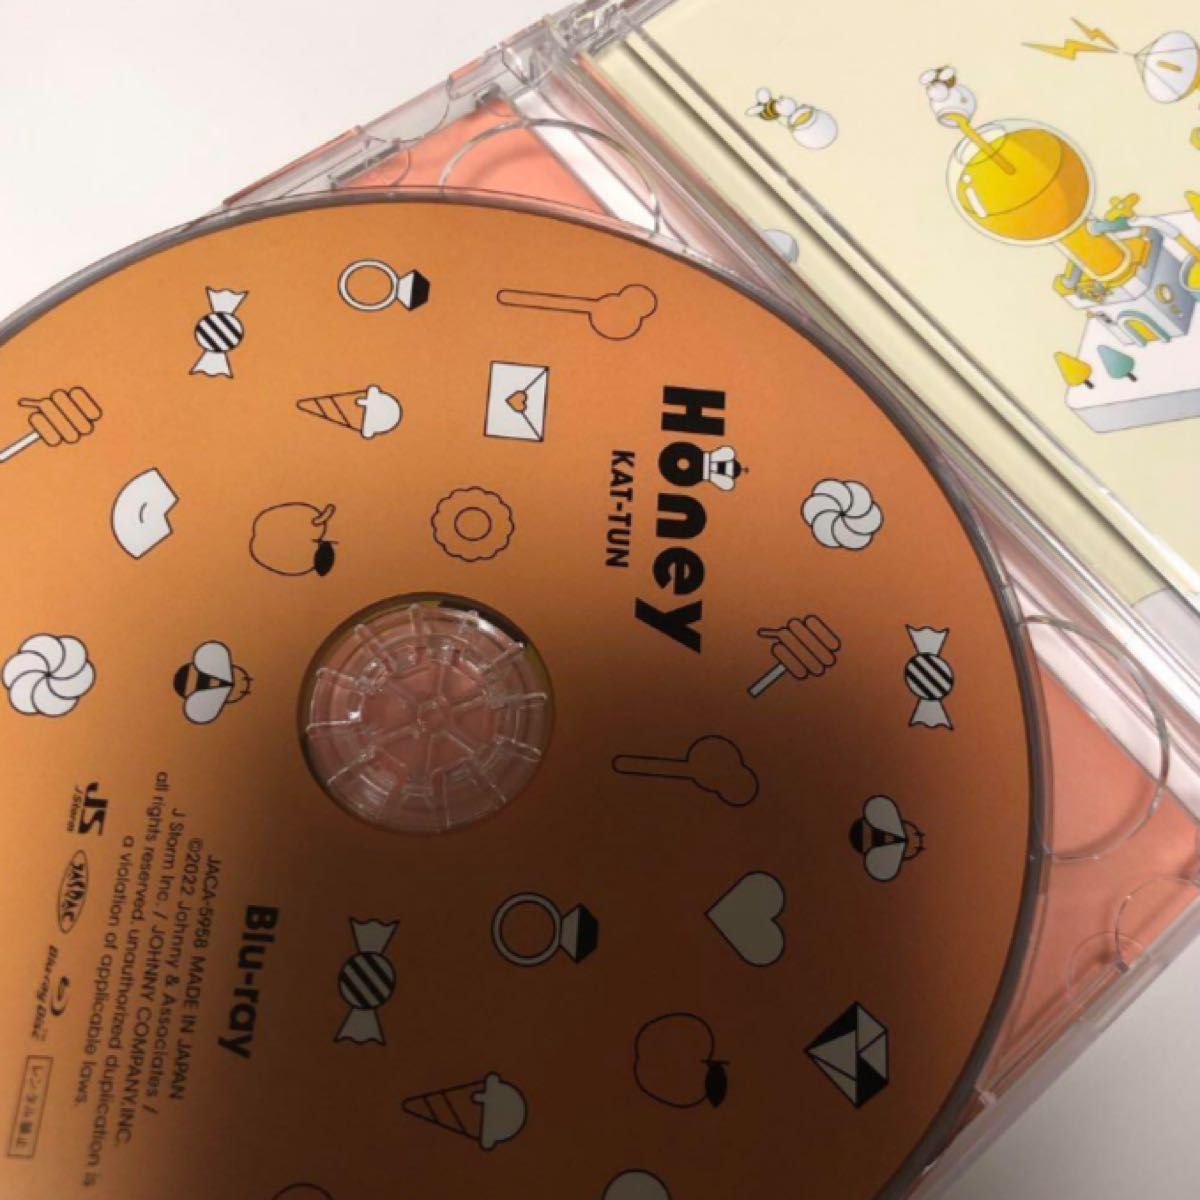 KAT-TUN Honey CD